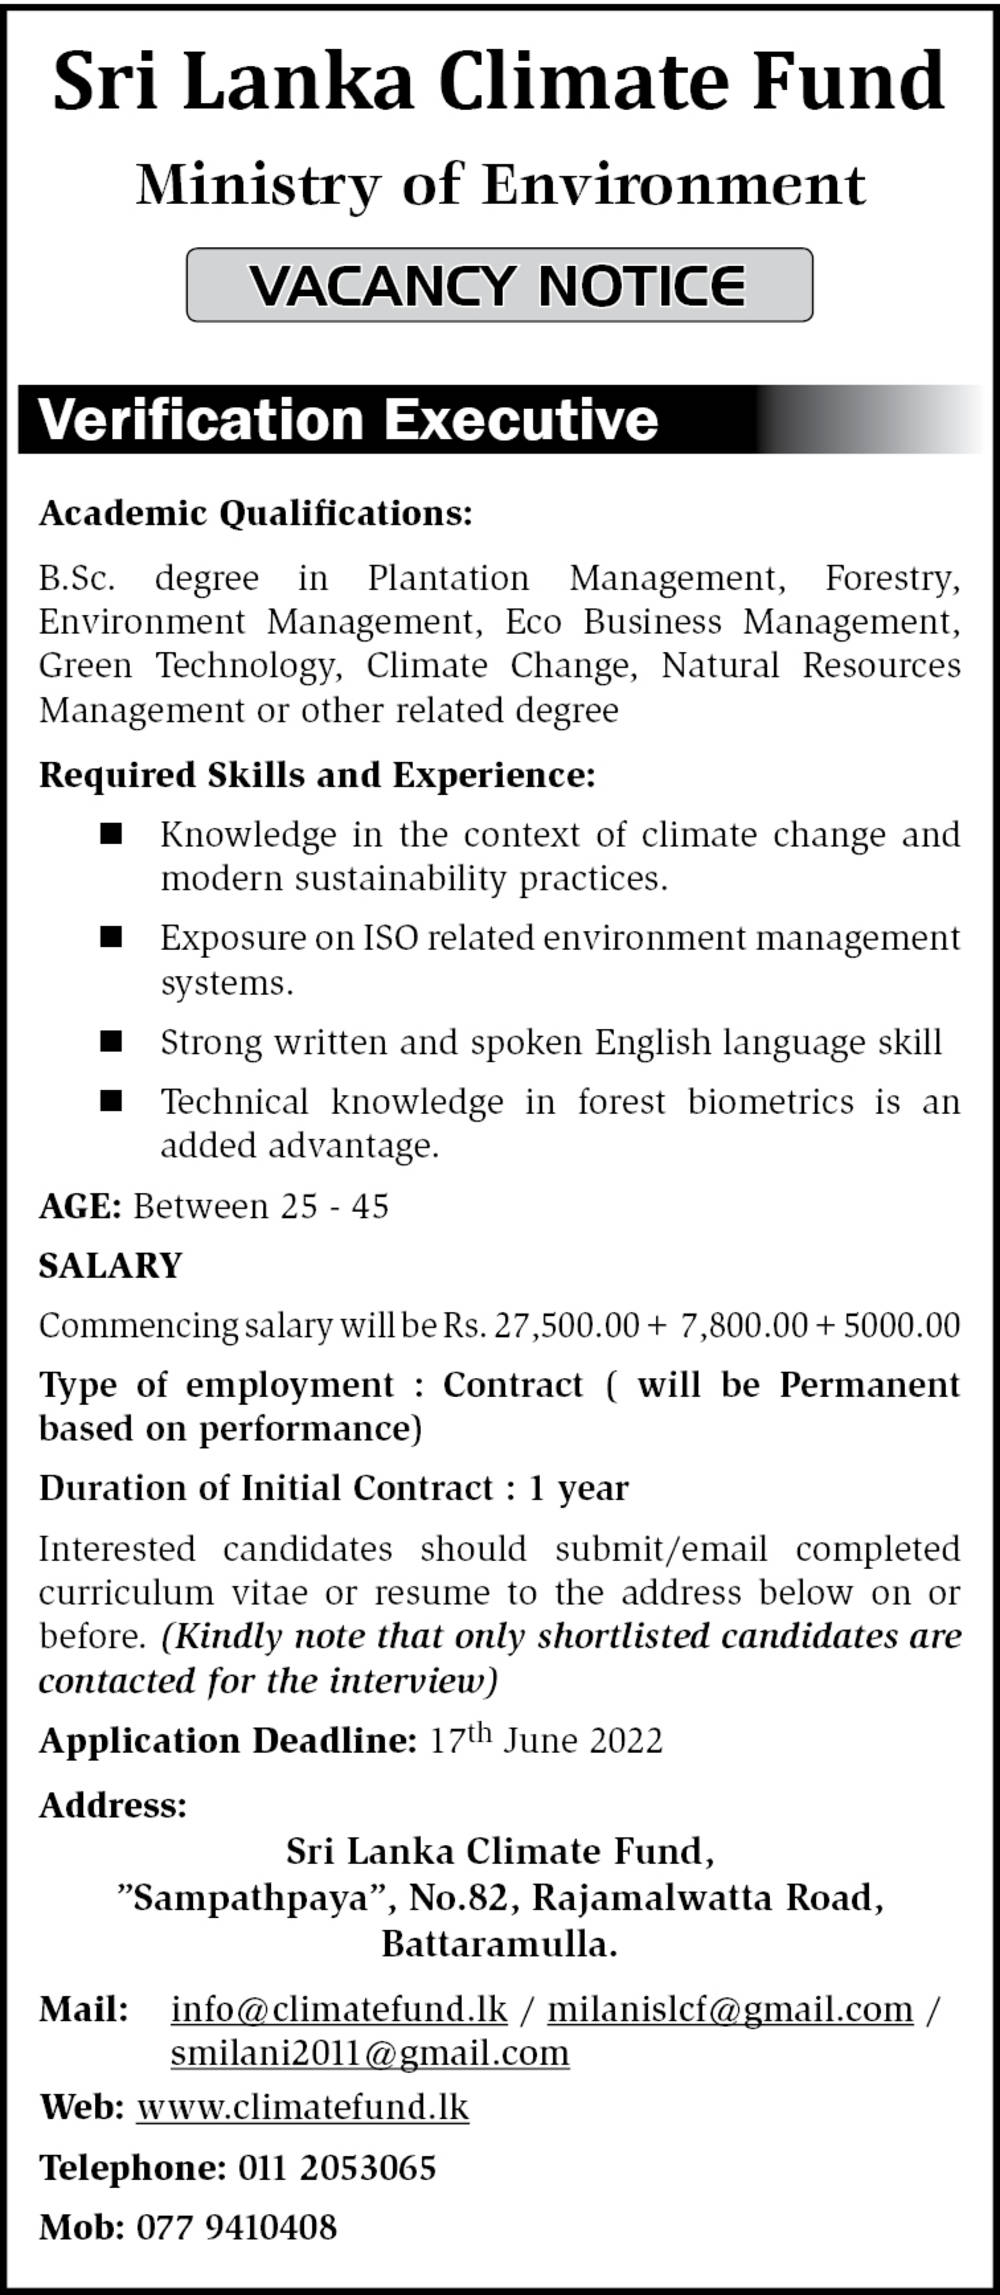 Verification Executive Vacancy - Sri Lanka Climate Fund Vacancies Jobs Application, Details Download